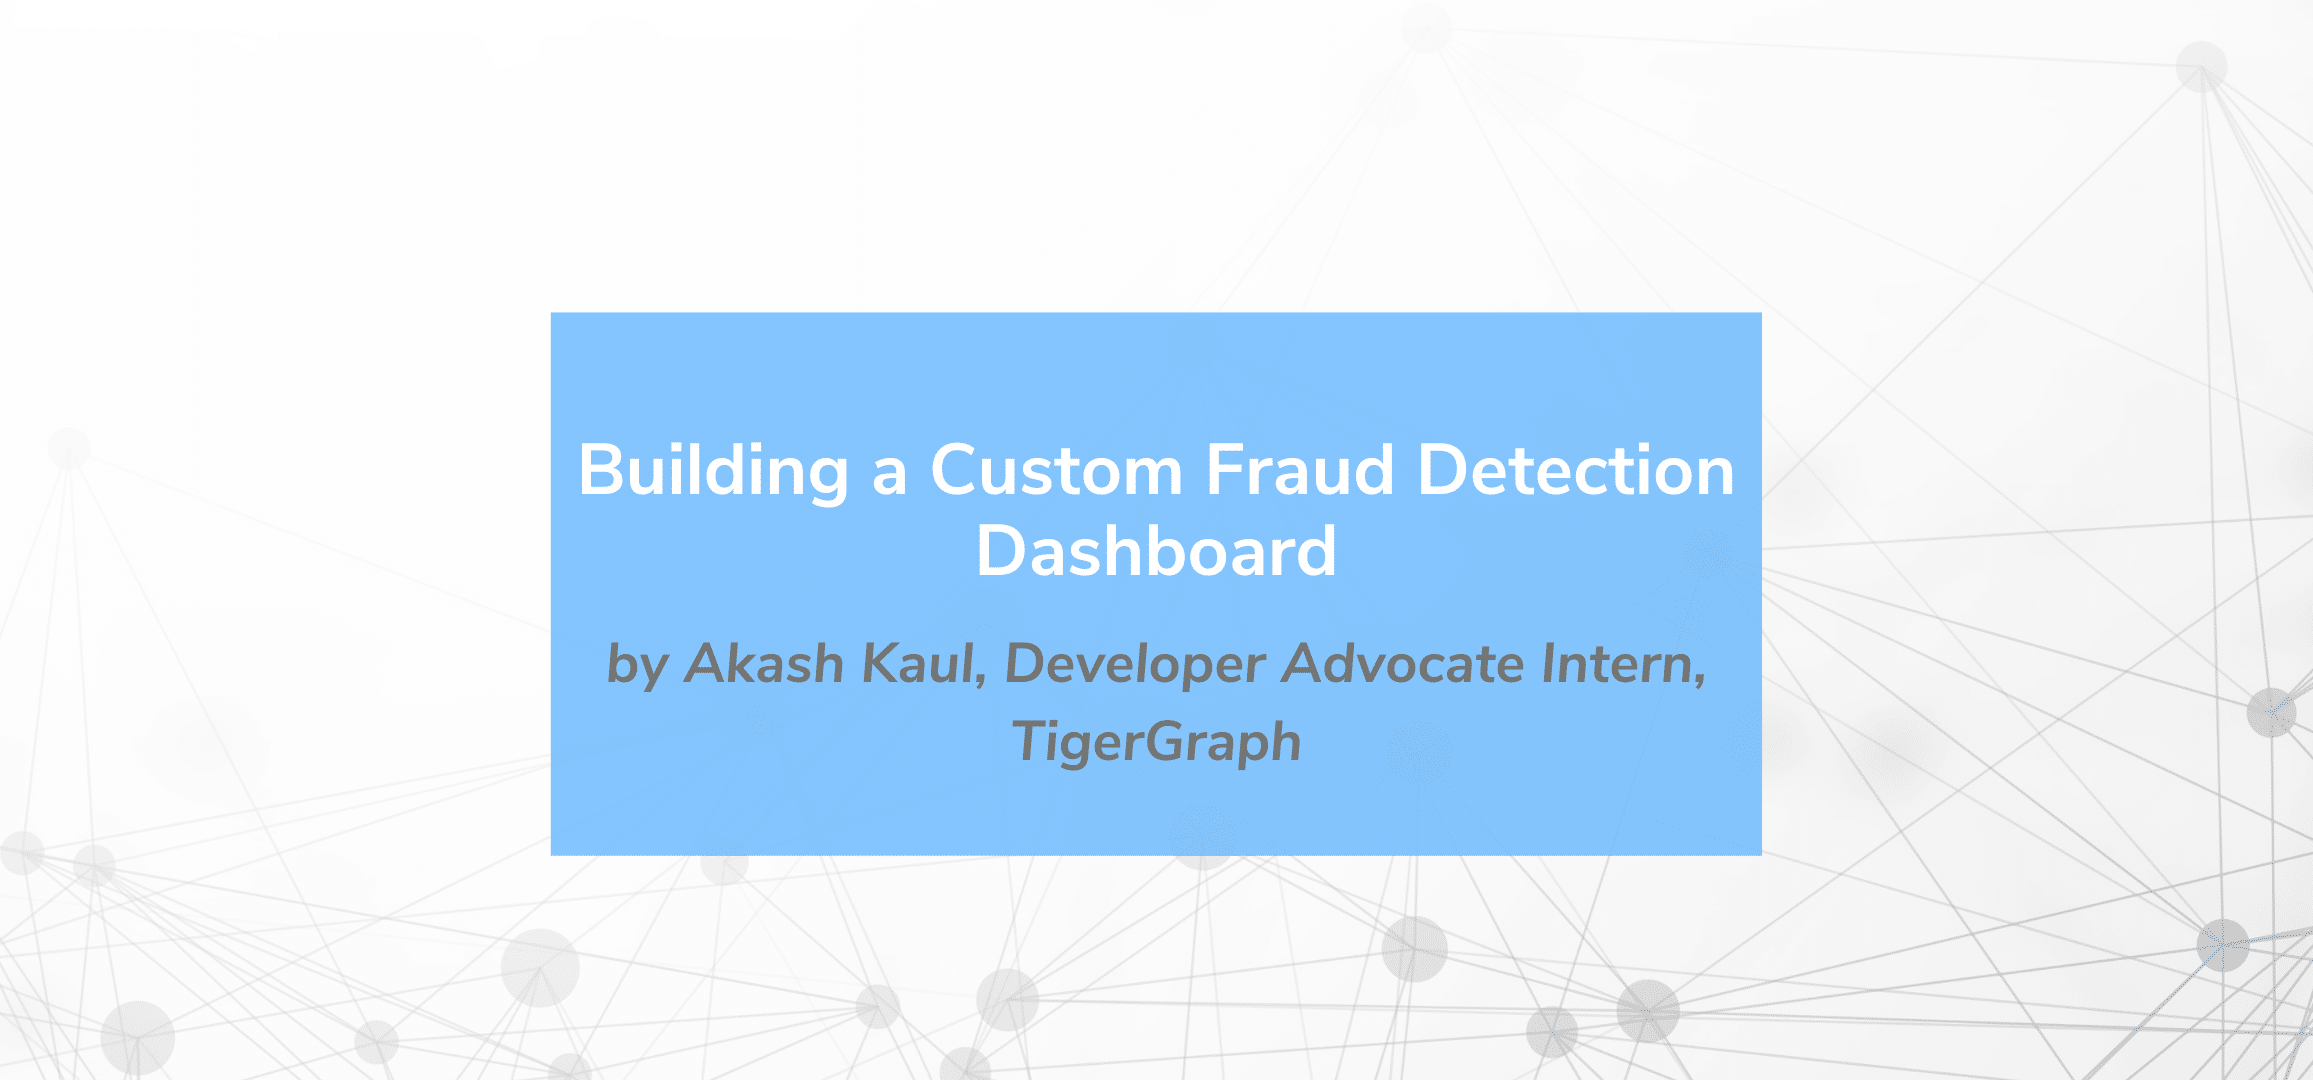 Building a Custom Fraud Detection Dashboard